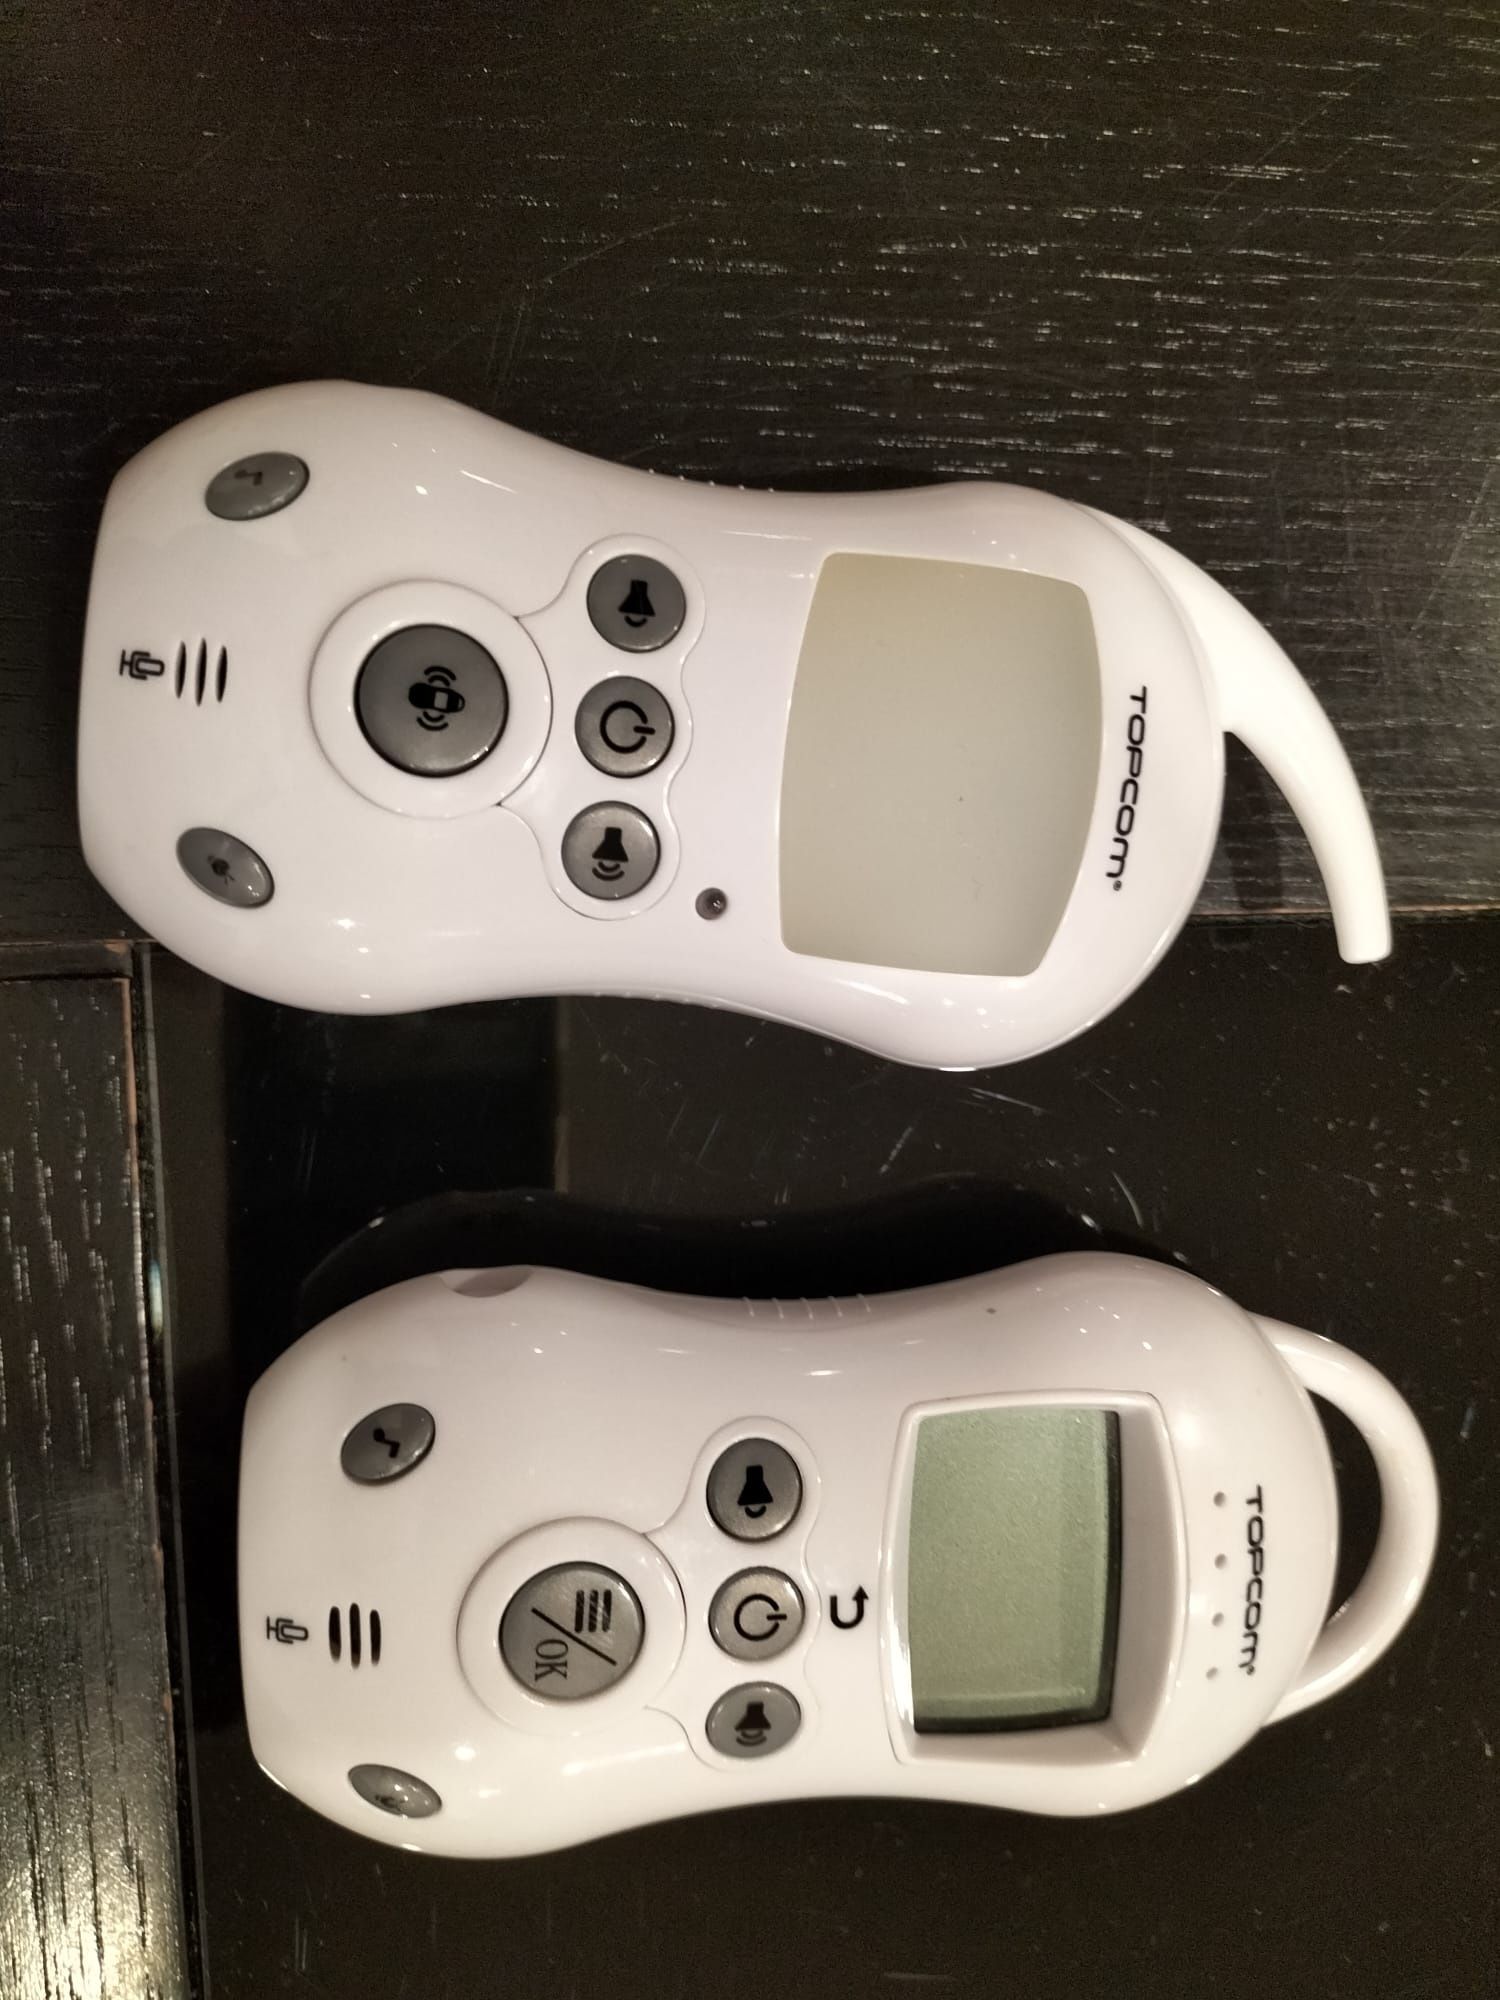 Monitor áudio para bebé TopCom